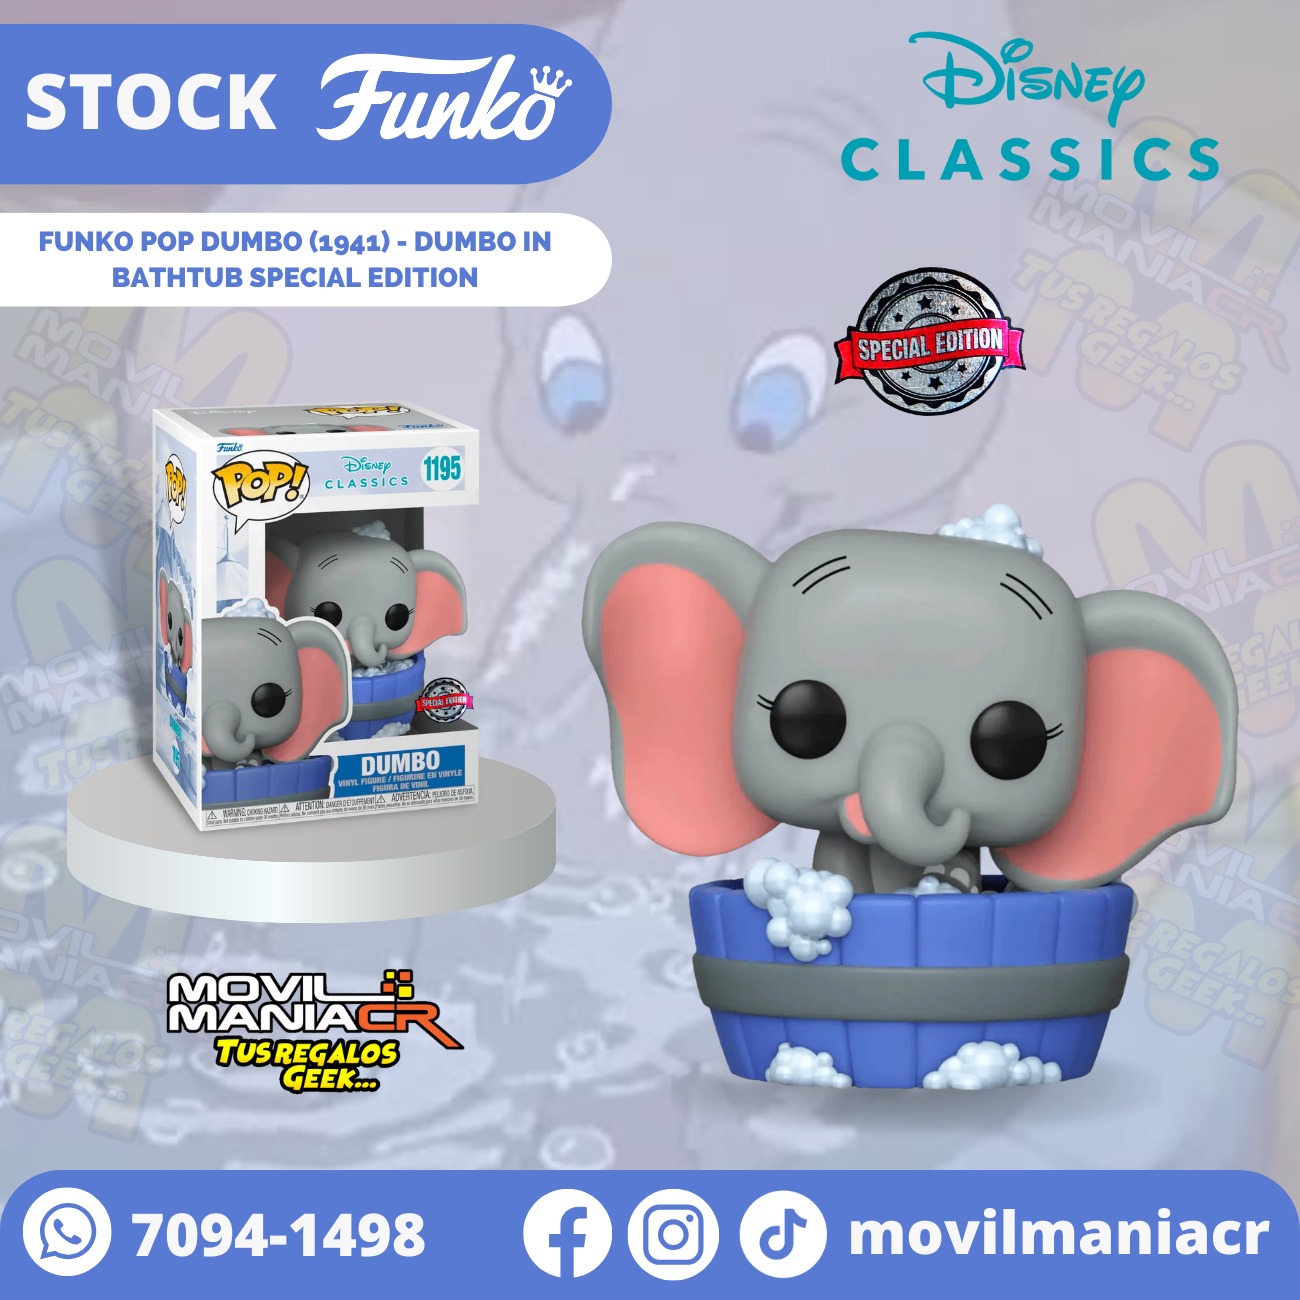 Funko Pop Disney Classics Dumbo Special Edition #1195